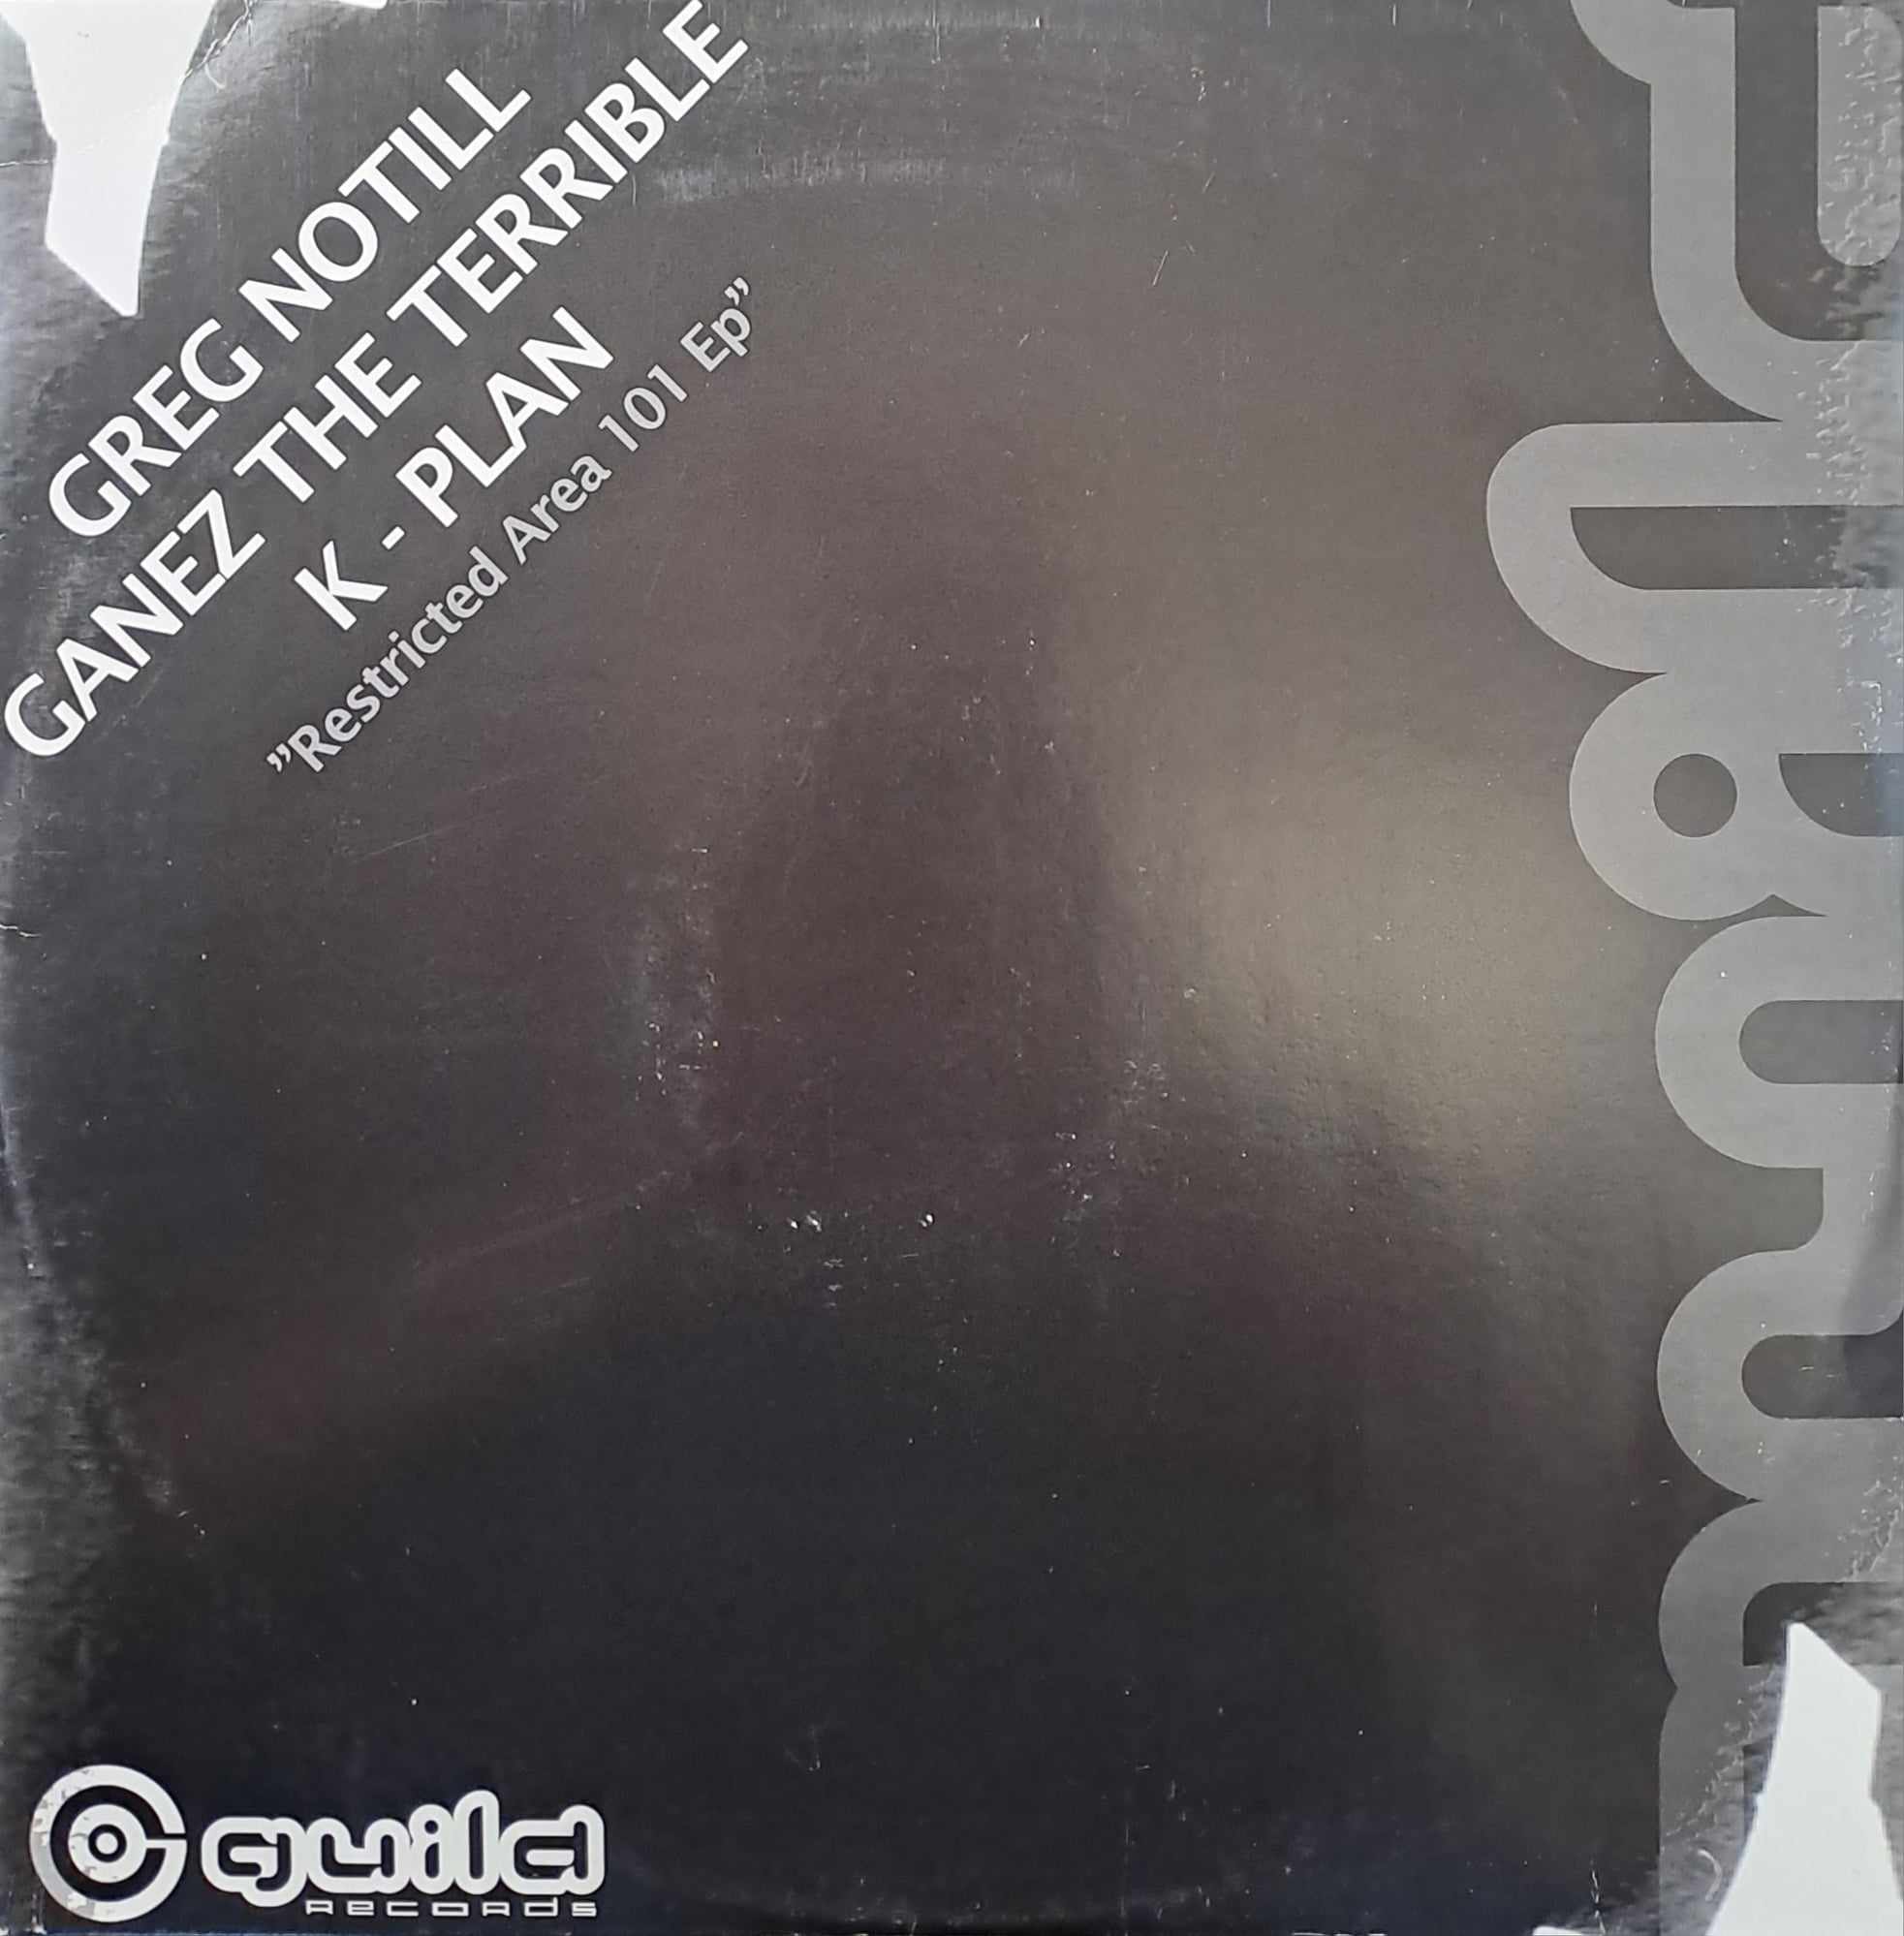 Guild Records 101 - vinyle Schranz